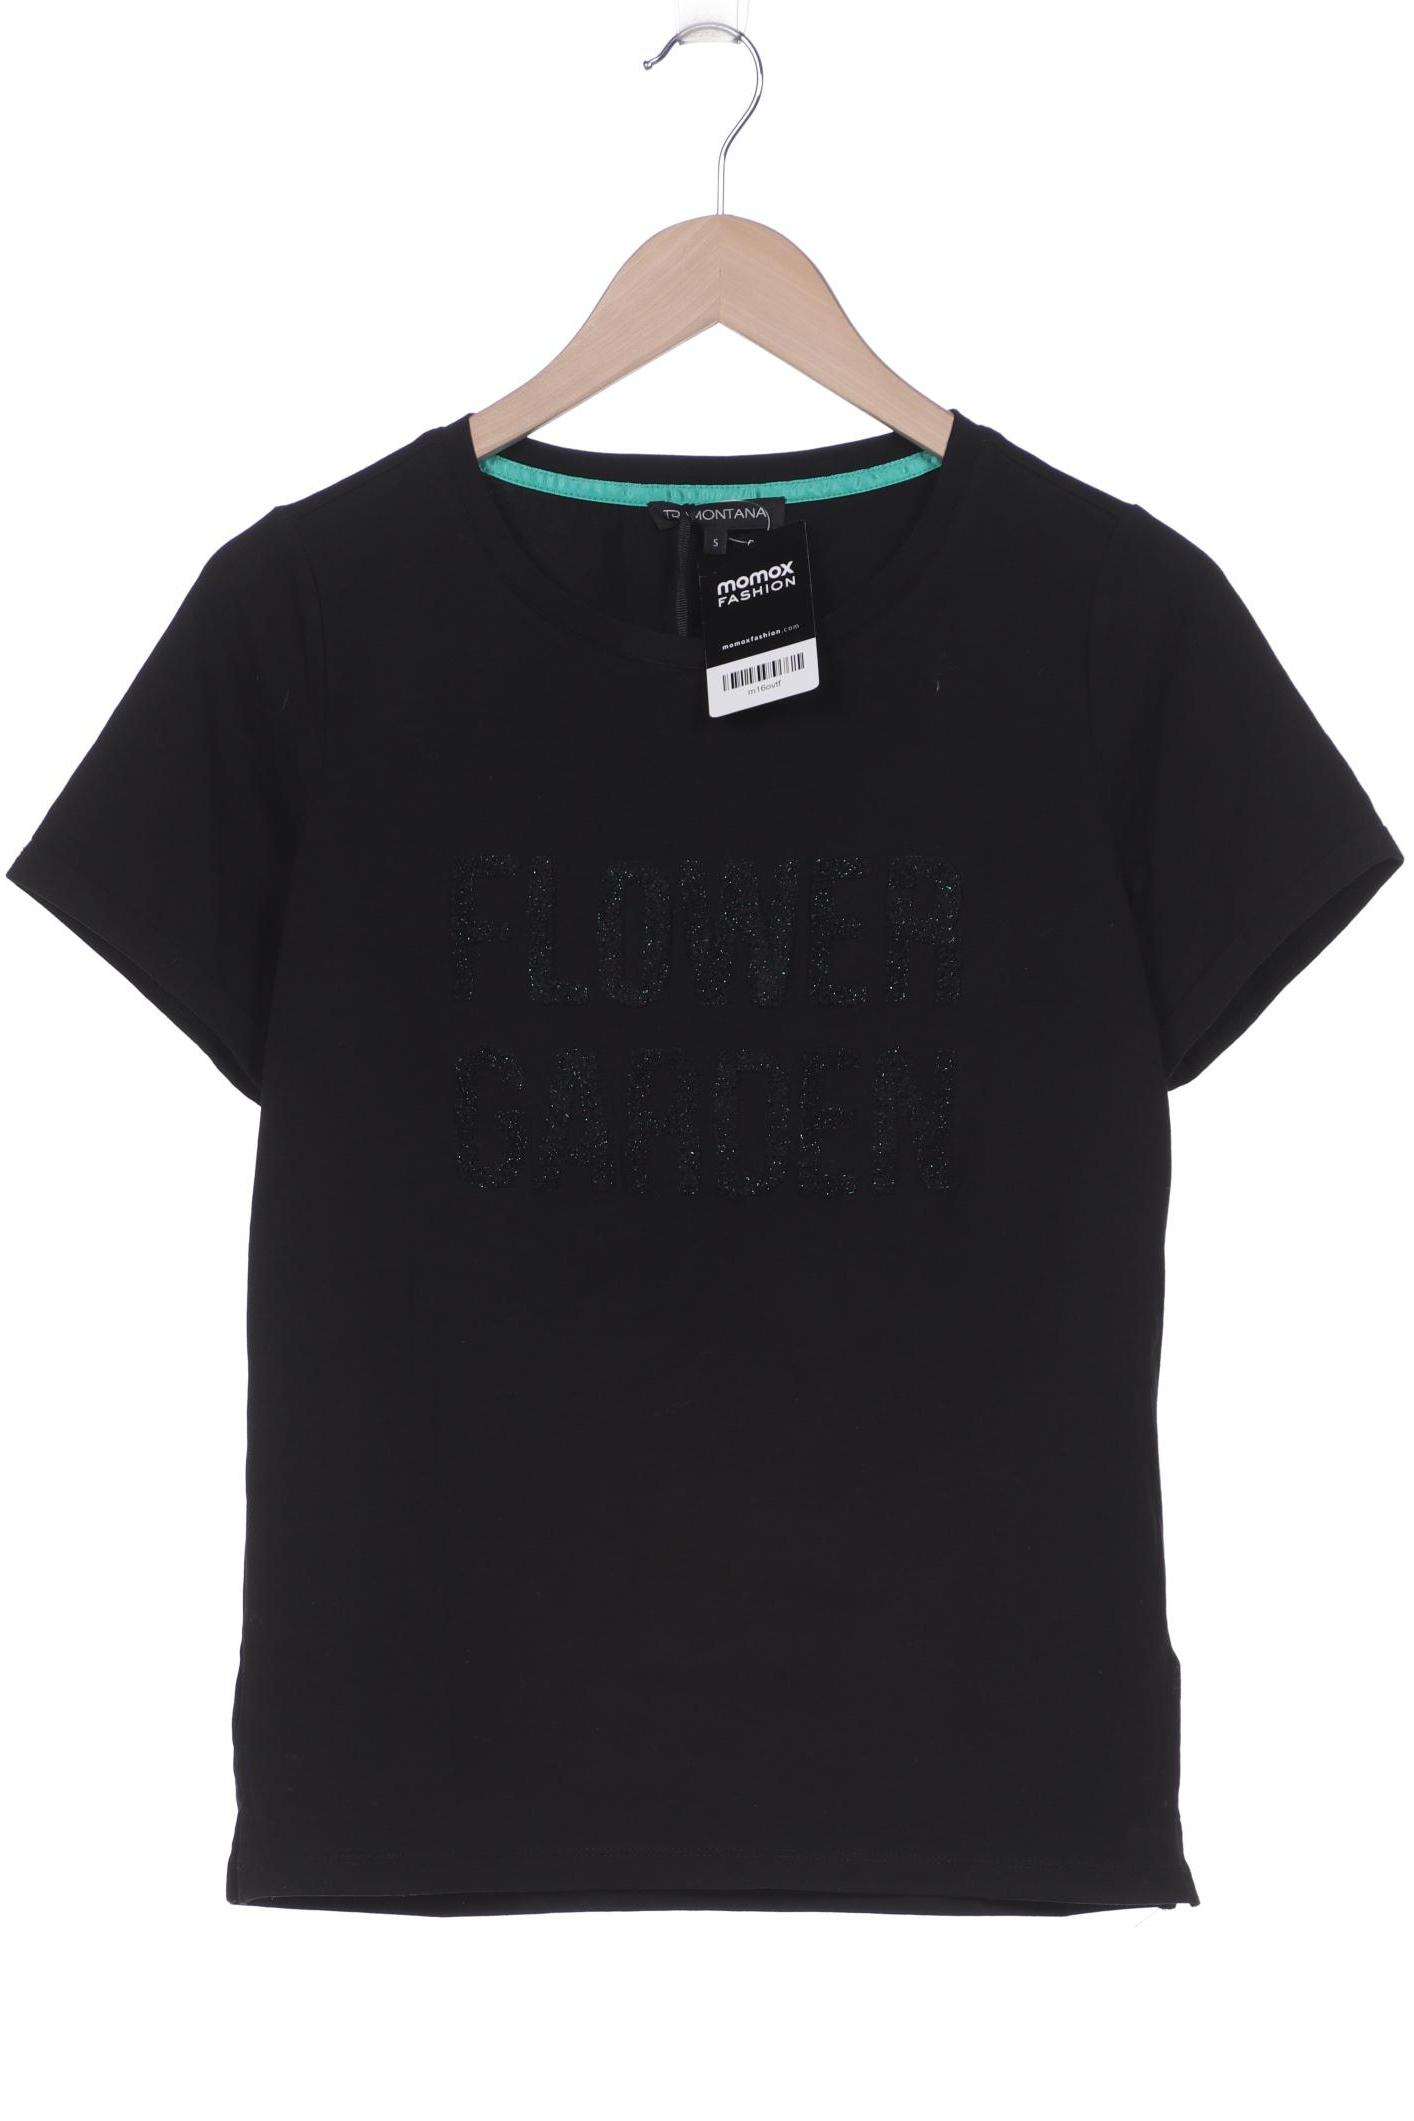 TRAMONTANA Damen T-Shirt, schwarz von TRAMONTANA